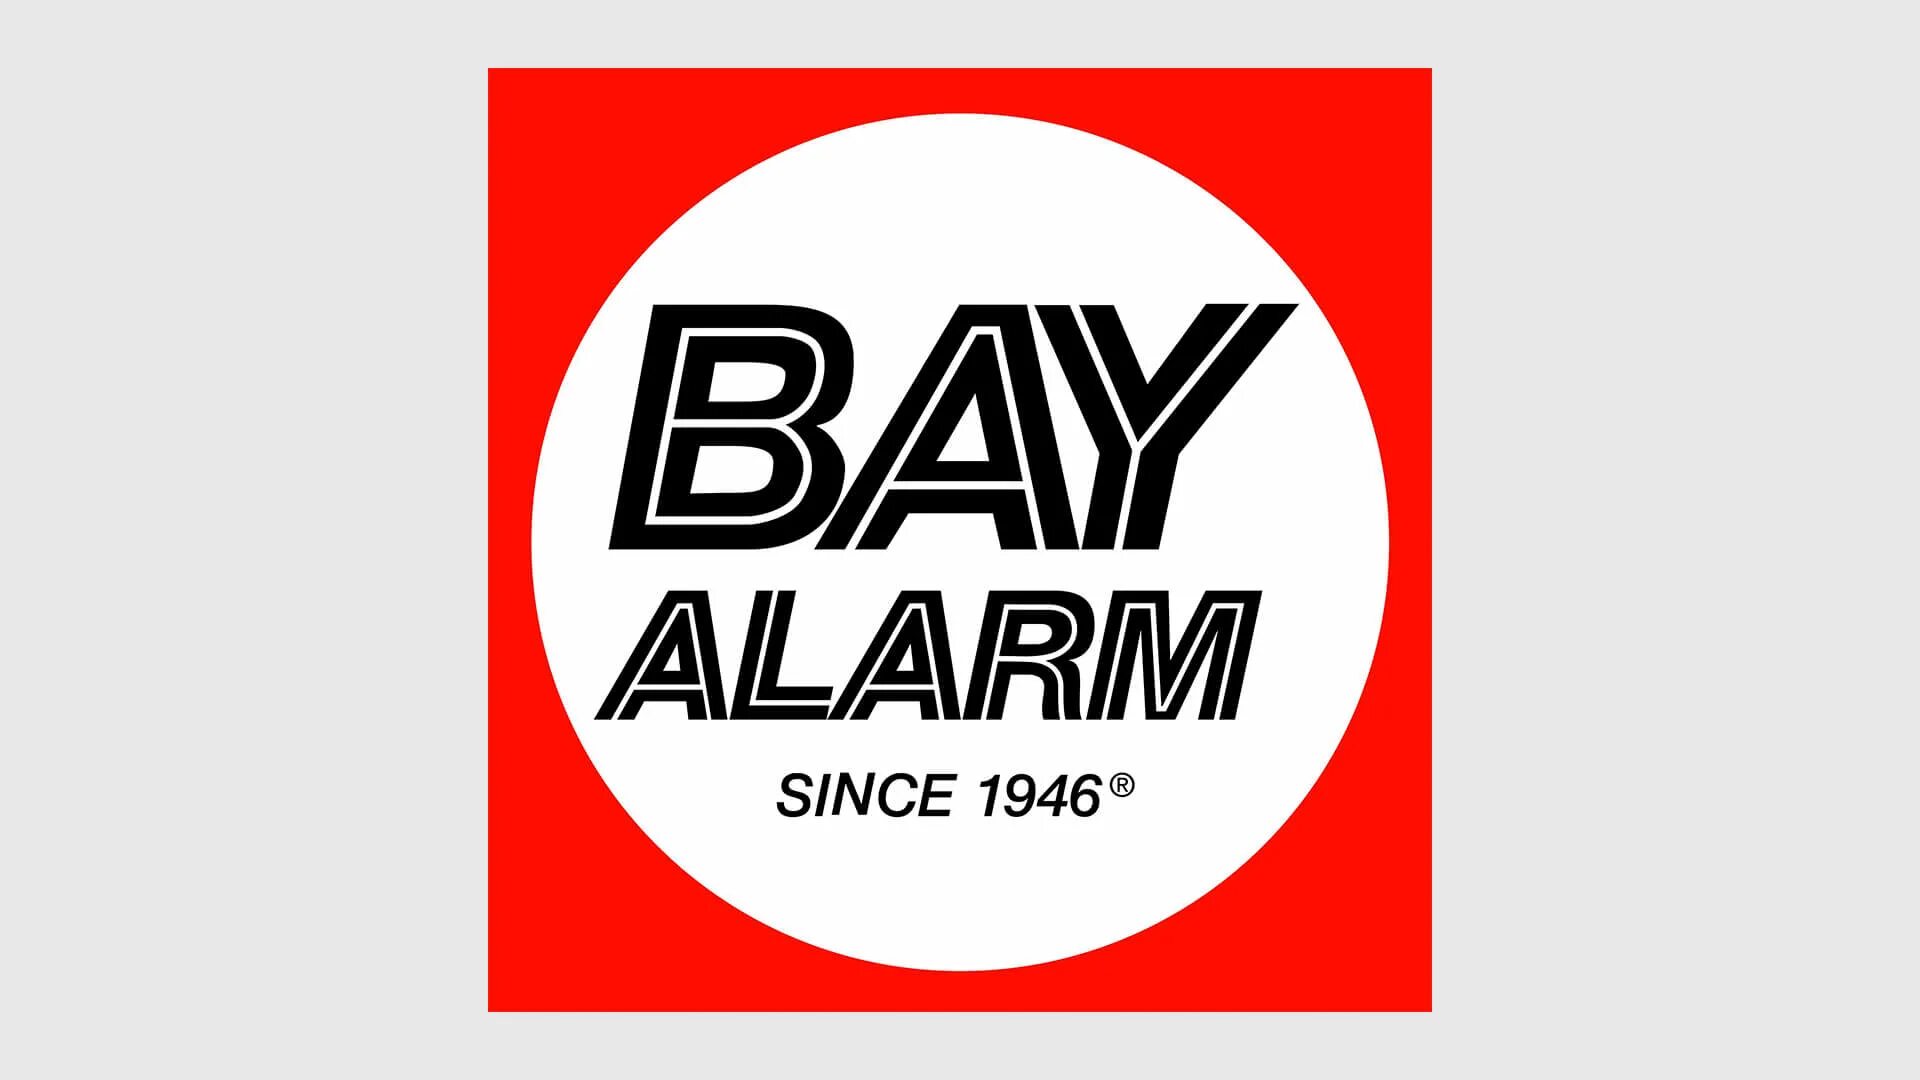 Since 1946. Май Аларм логотип. Exceed логотип. Юнион Аларм логотип. Baylar логотип вектор.